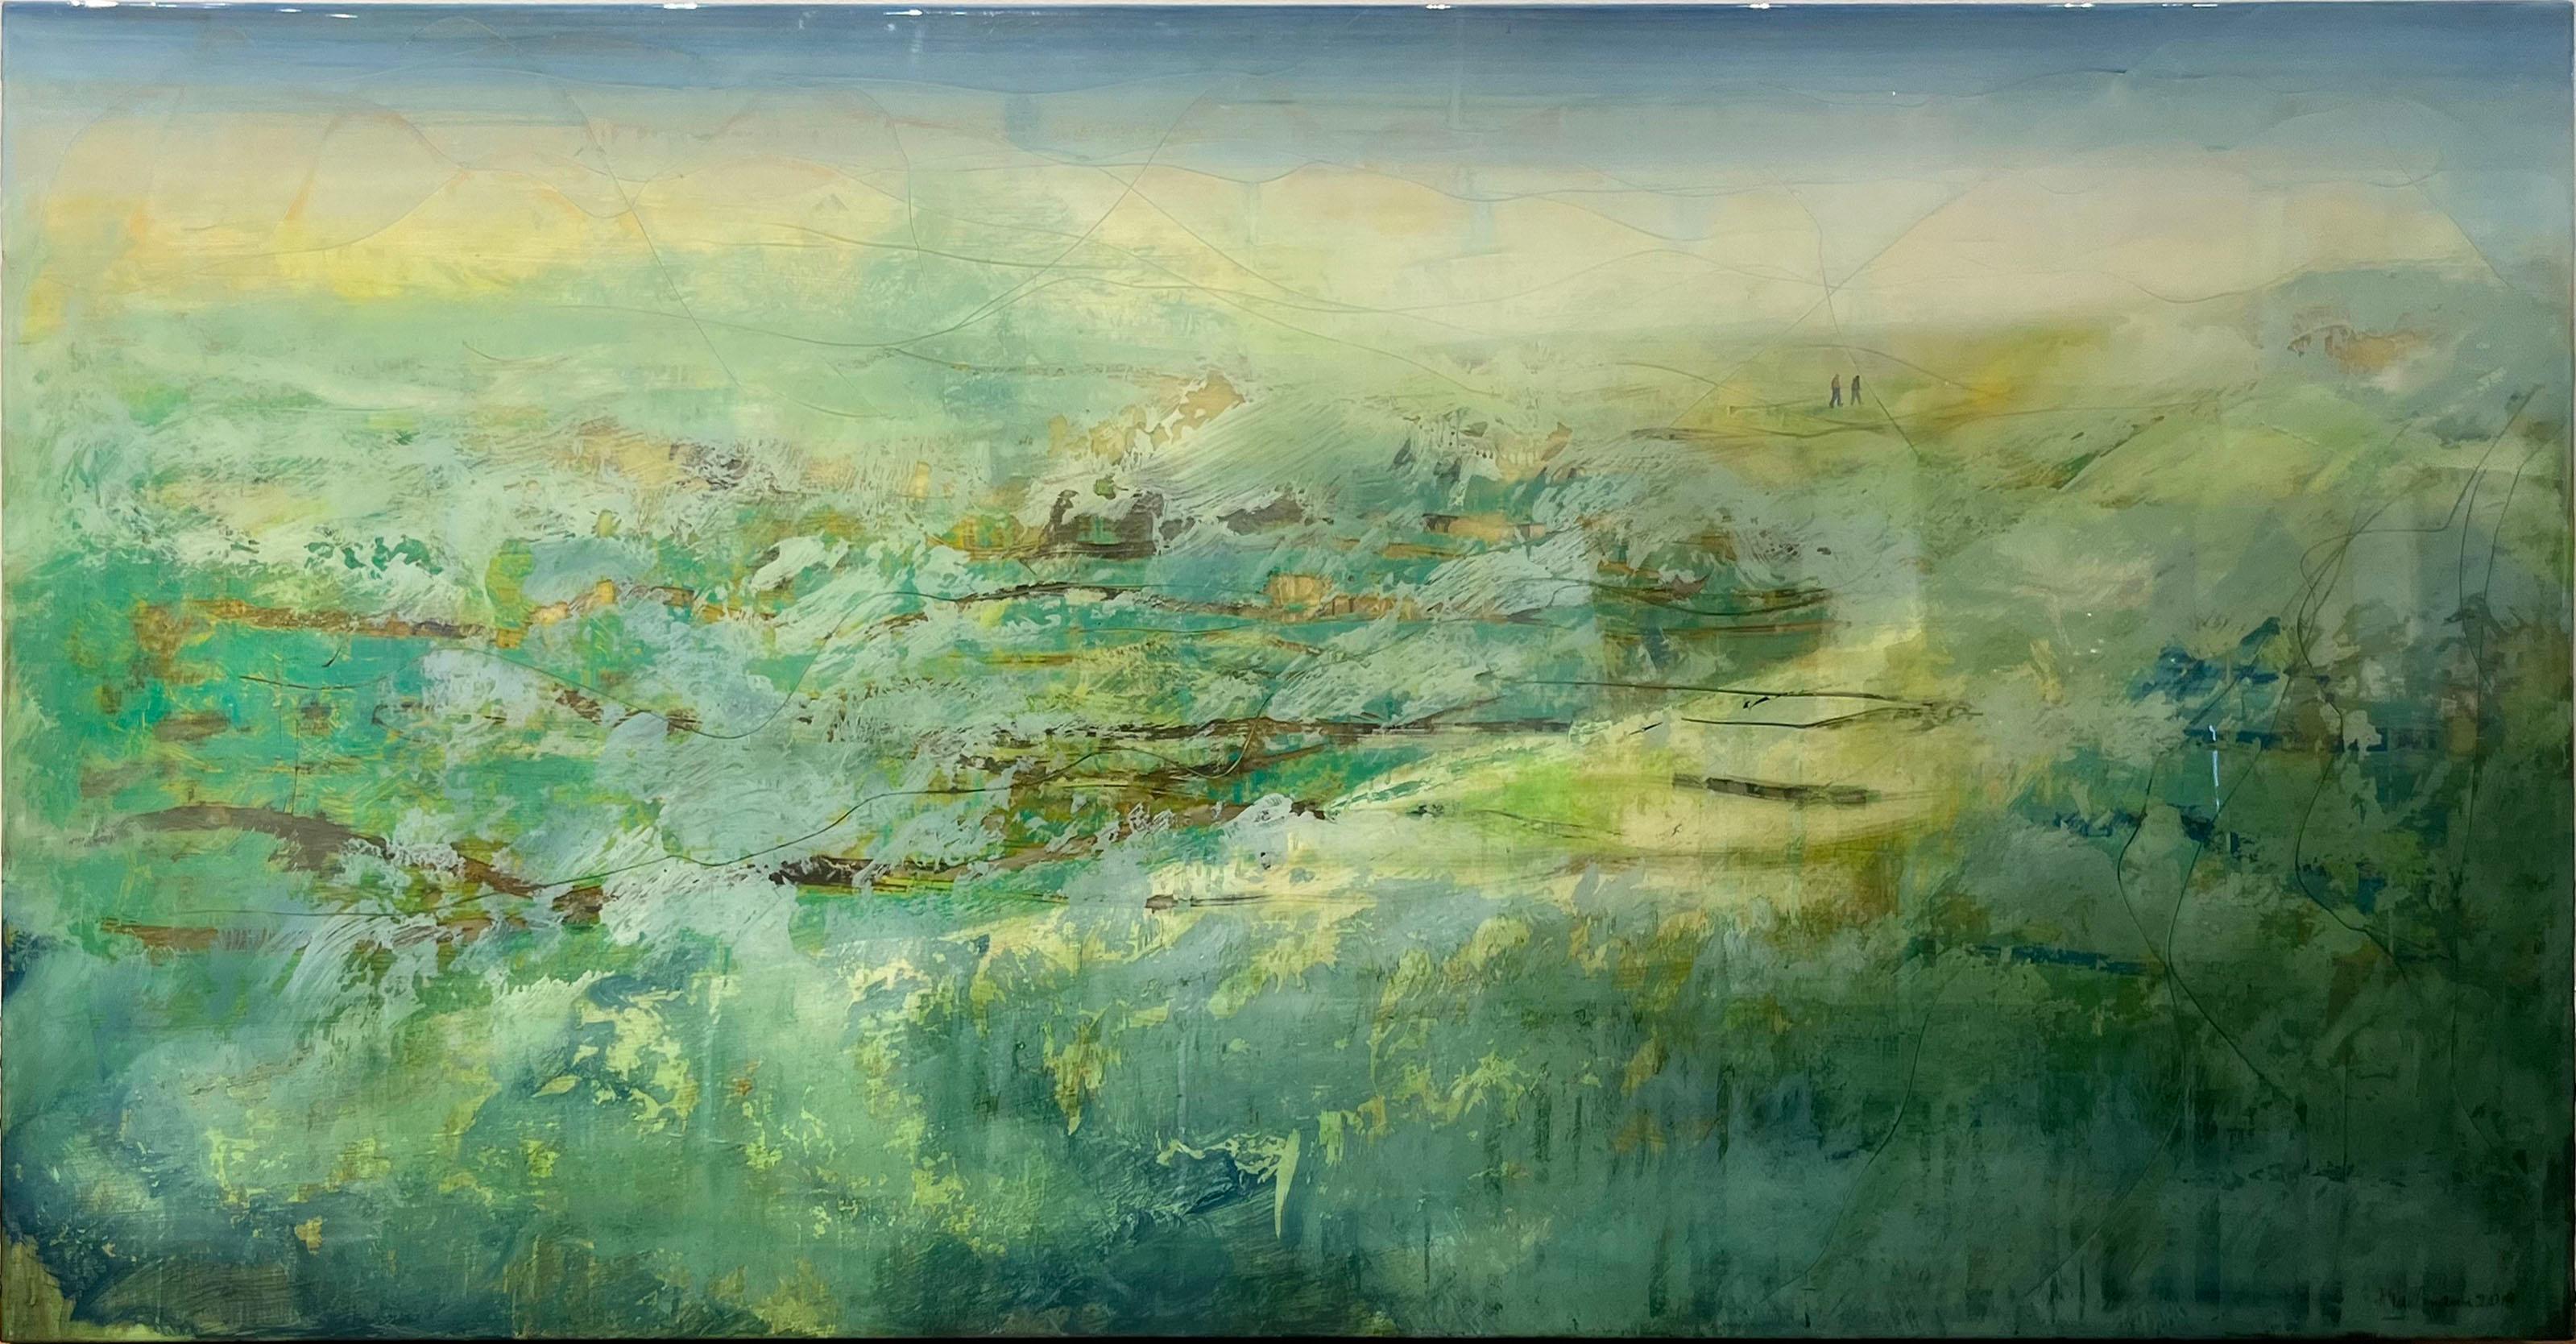 FARAWAY LAND - Contemporary Painting by Arturo Mallmann